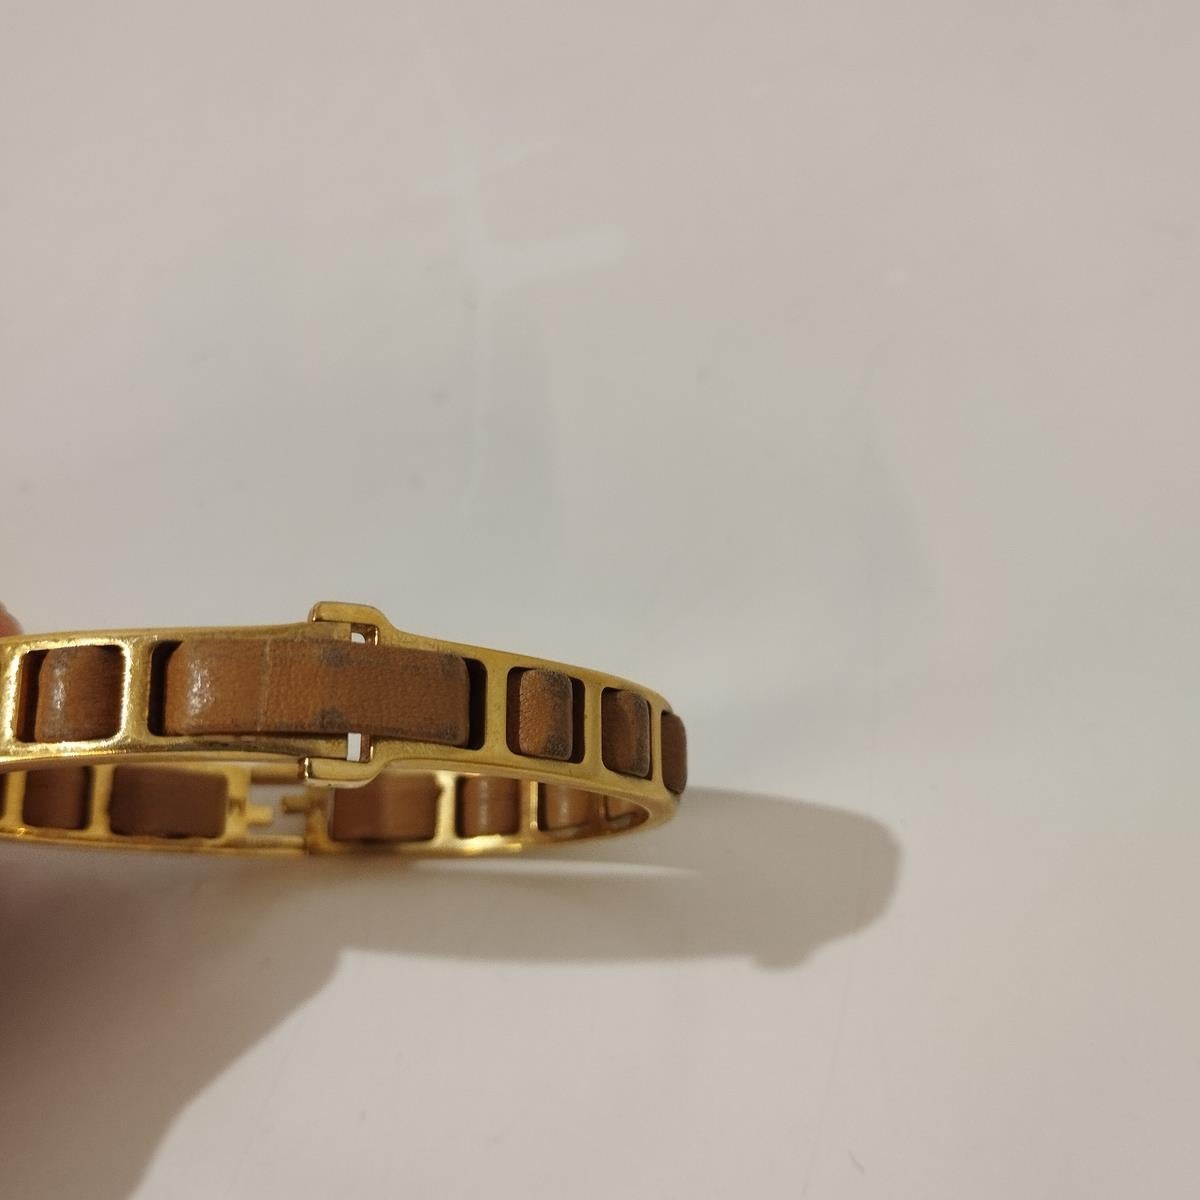 Fendi Golden Bracelet In Fair Condition For Sale In Gazzaniga (BG), IT